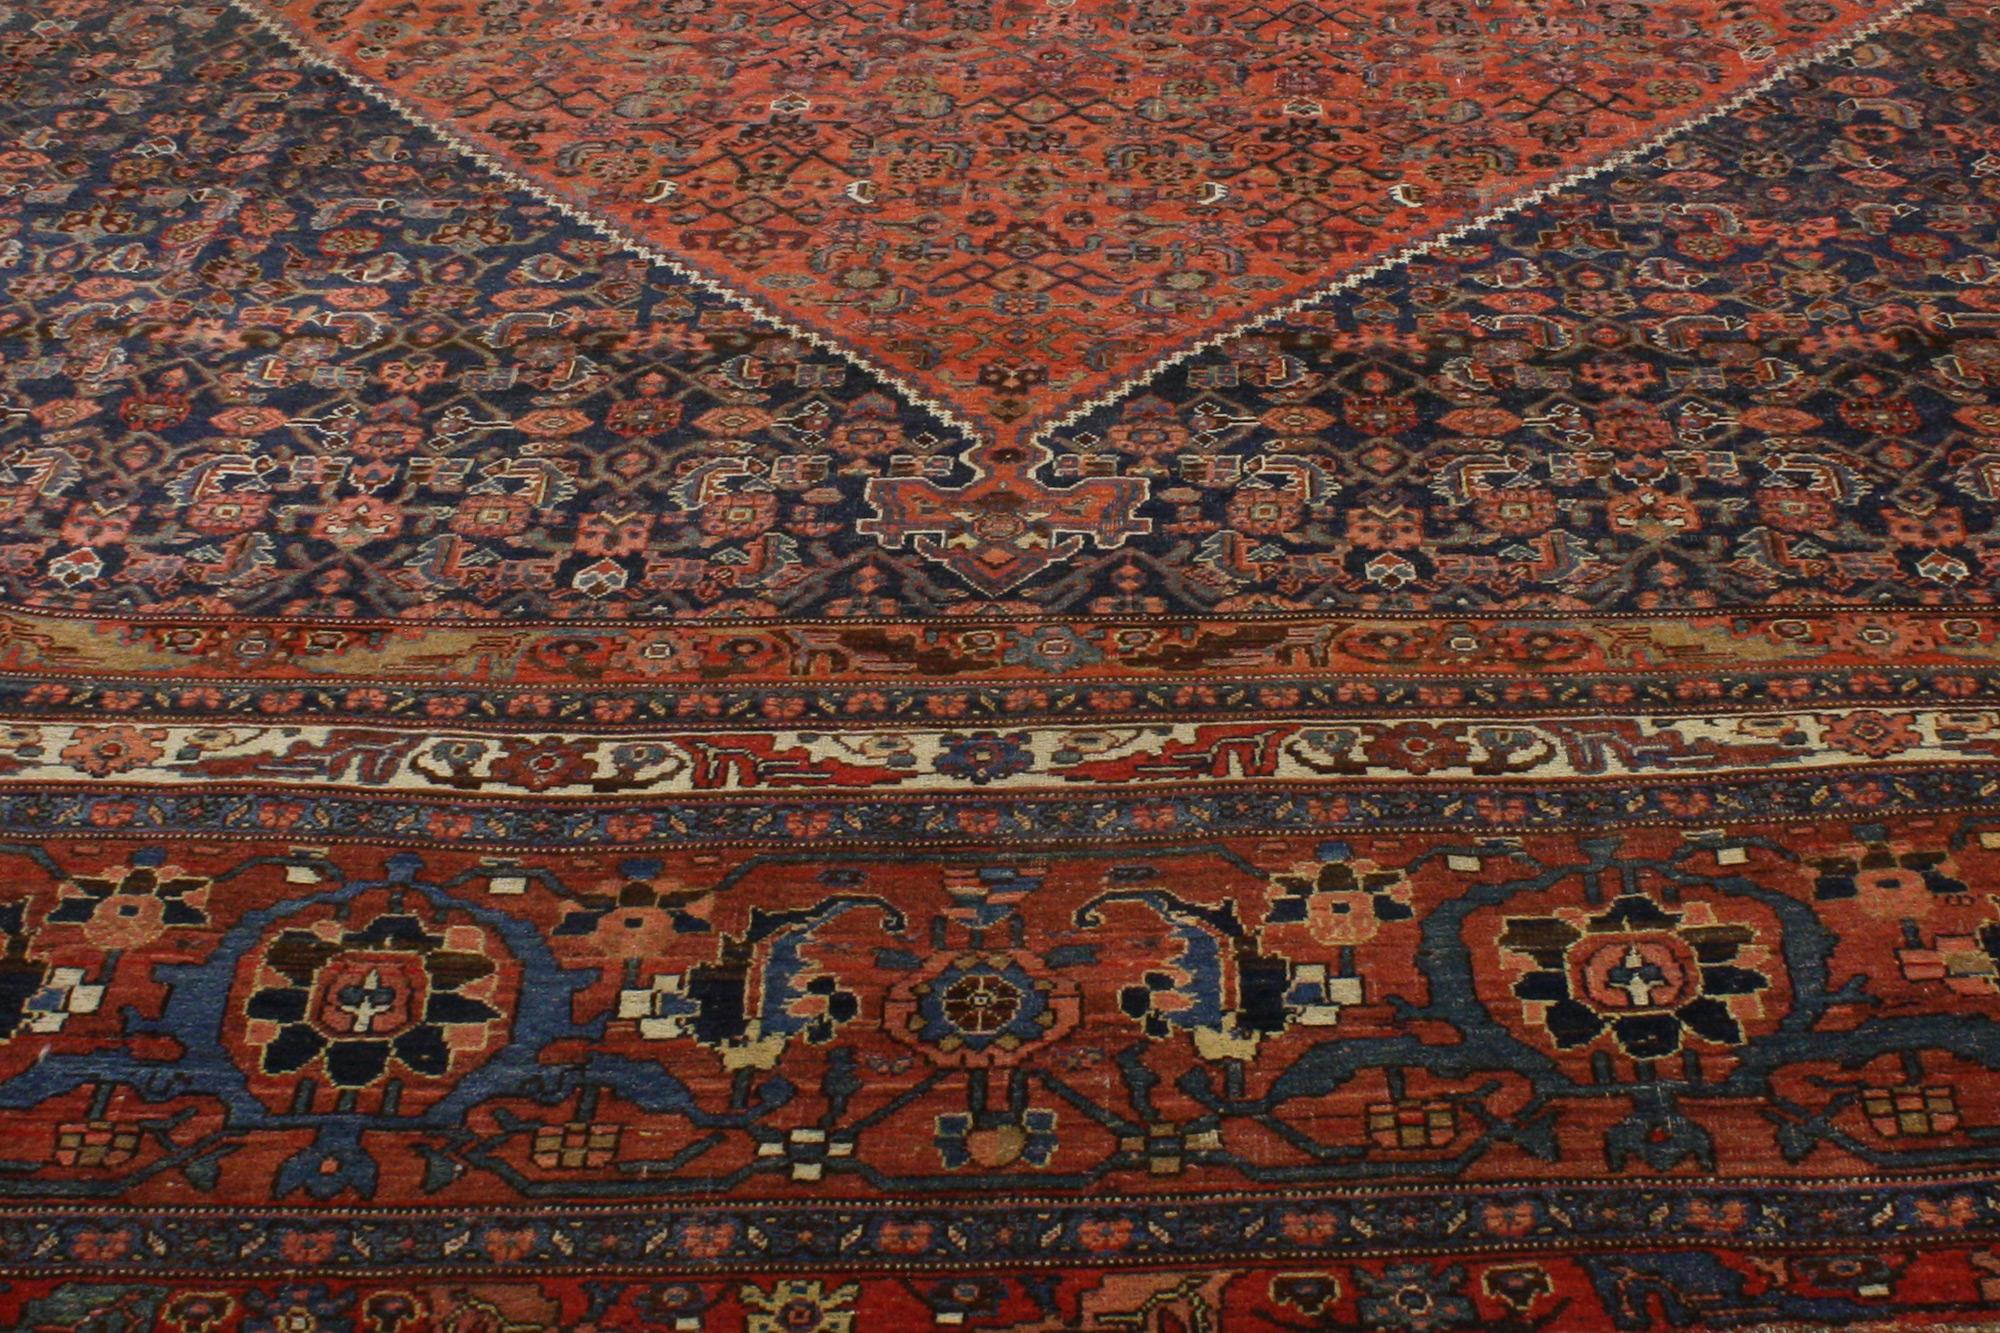 19th Century Oversized Antique Persian Bijar Rug, Hotel Lobby Size Carpet For Sale